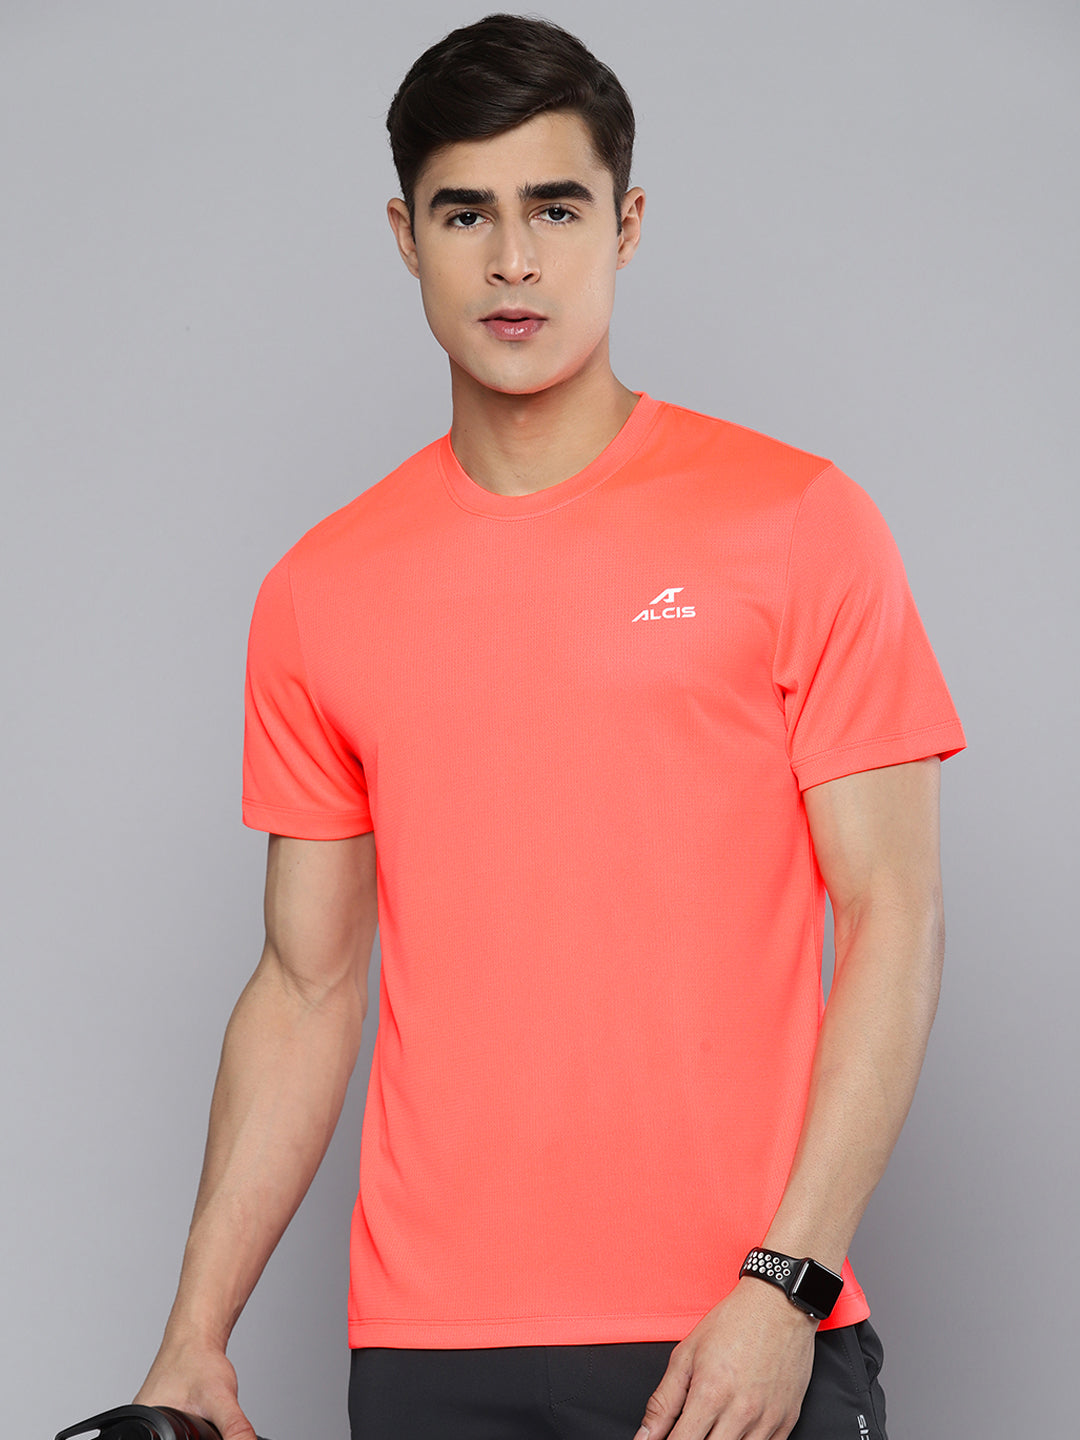 Alcis Men Neon Orange DryTech Sports T-shirt